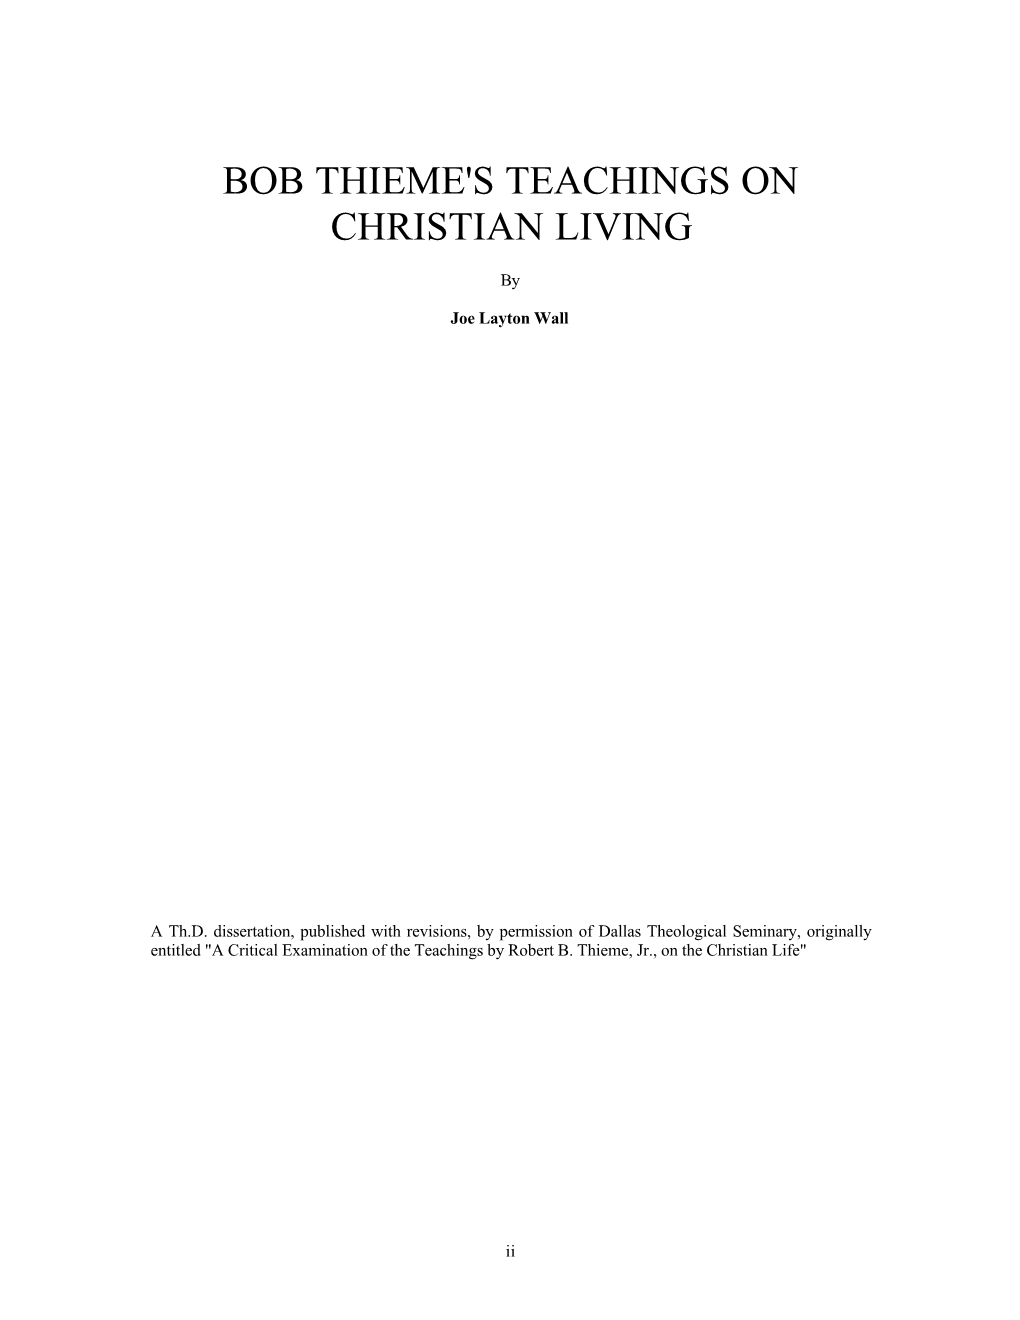 Bob Thieme's Teachings on Christian Living